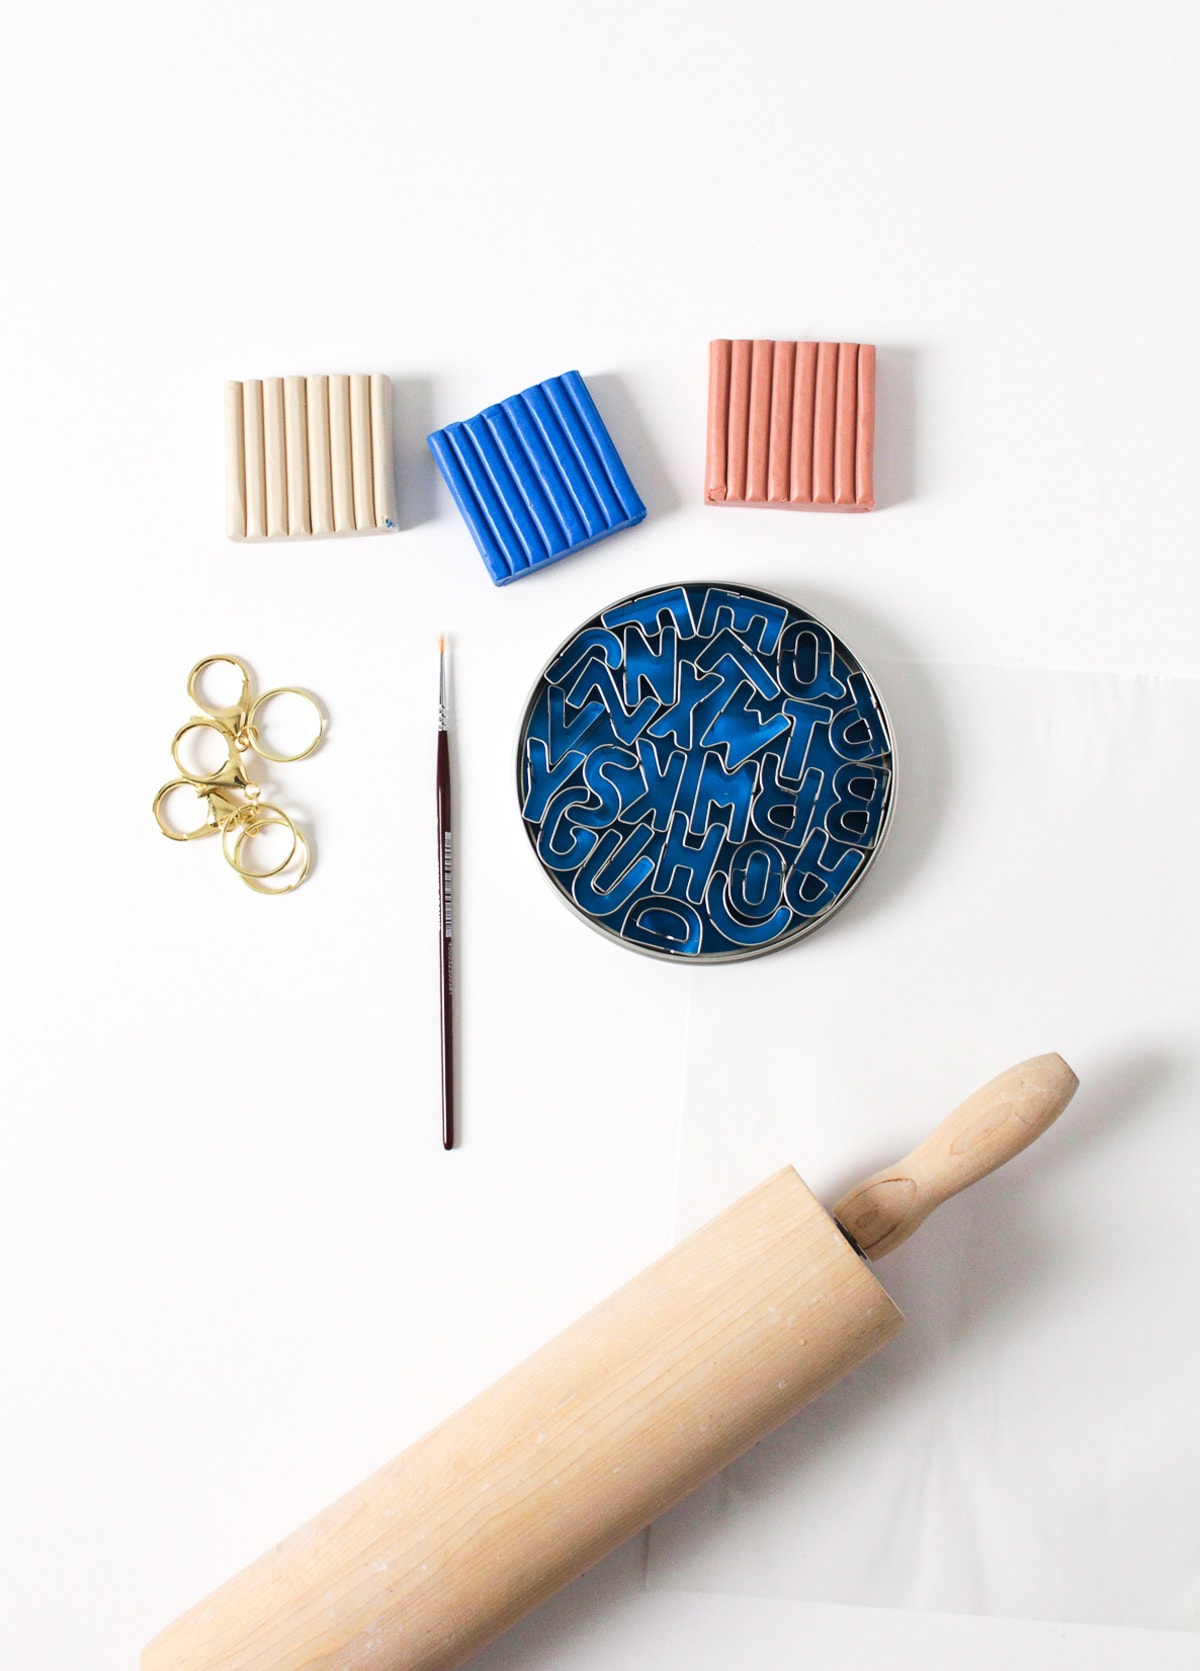 DIY clay letter keychain by Sugar & Cloth, an award winning DIY, home decor, and recipes blog.